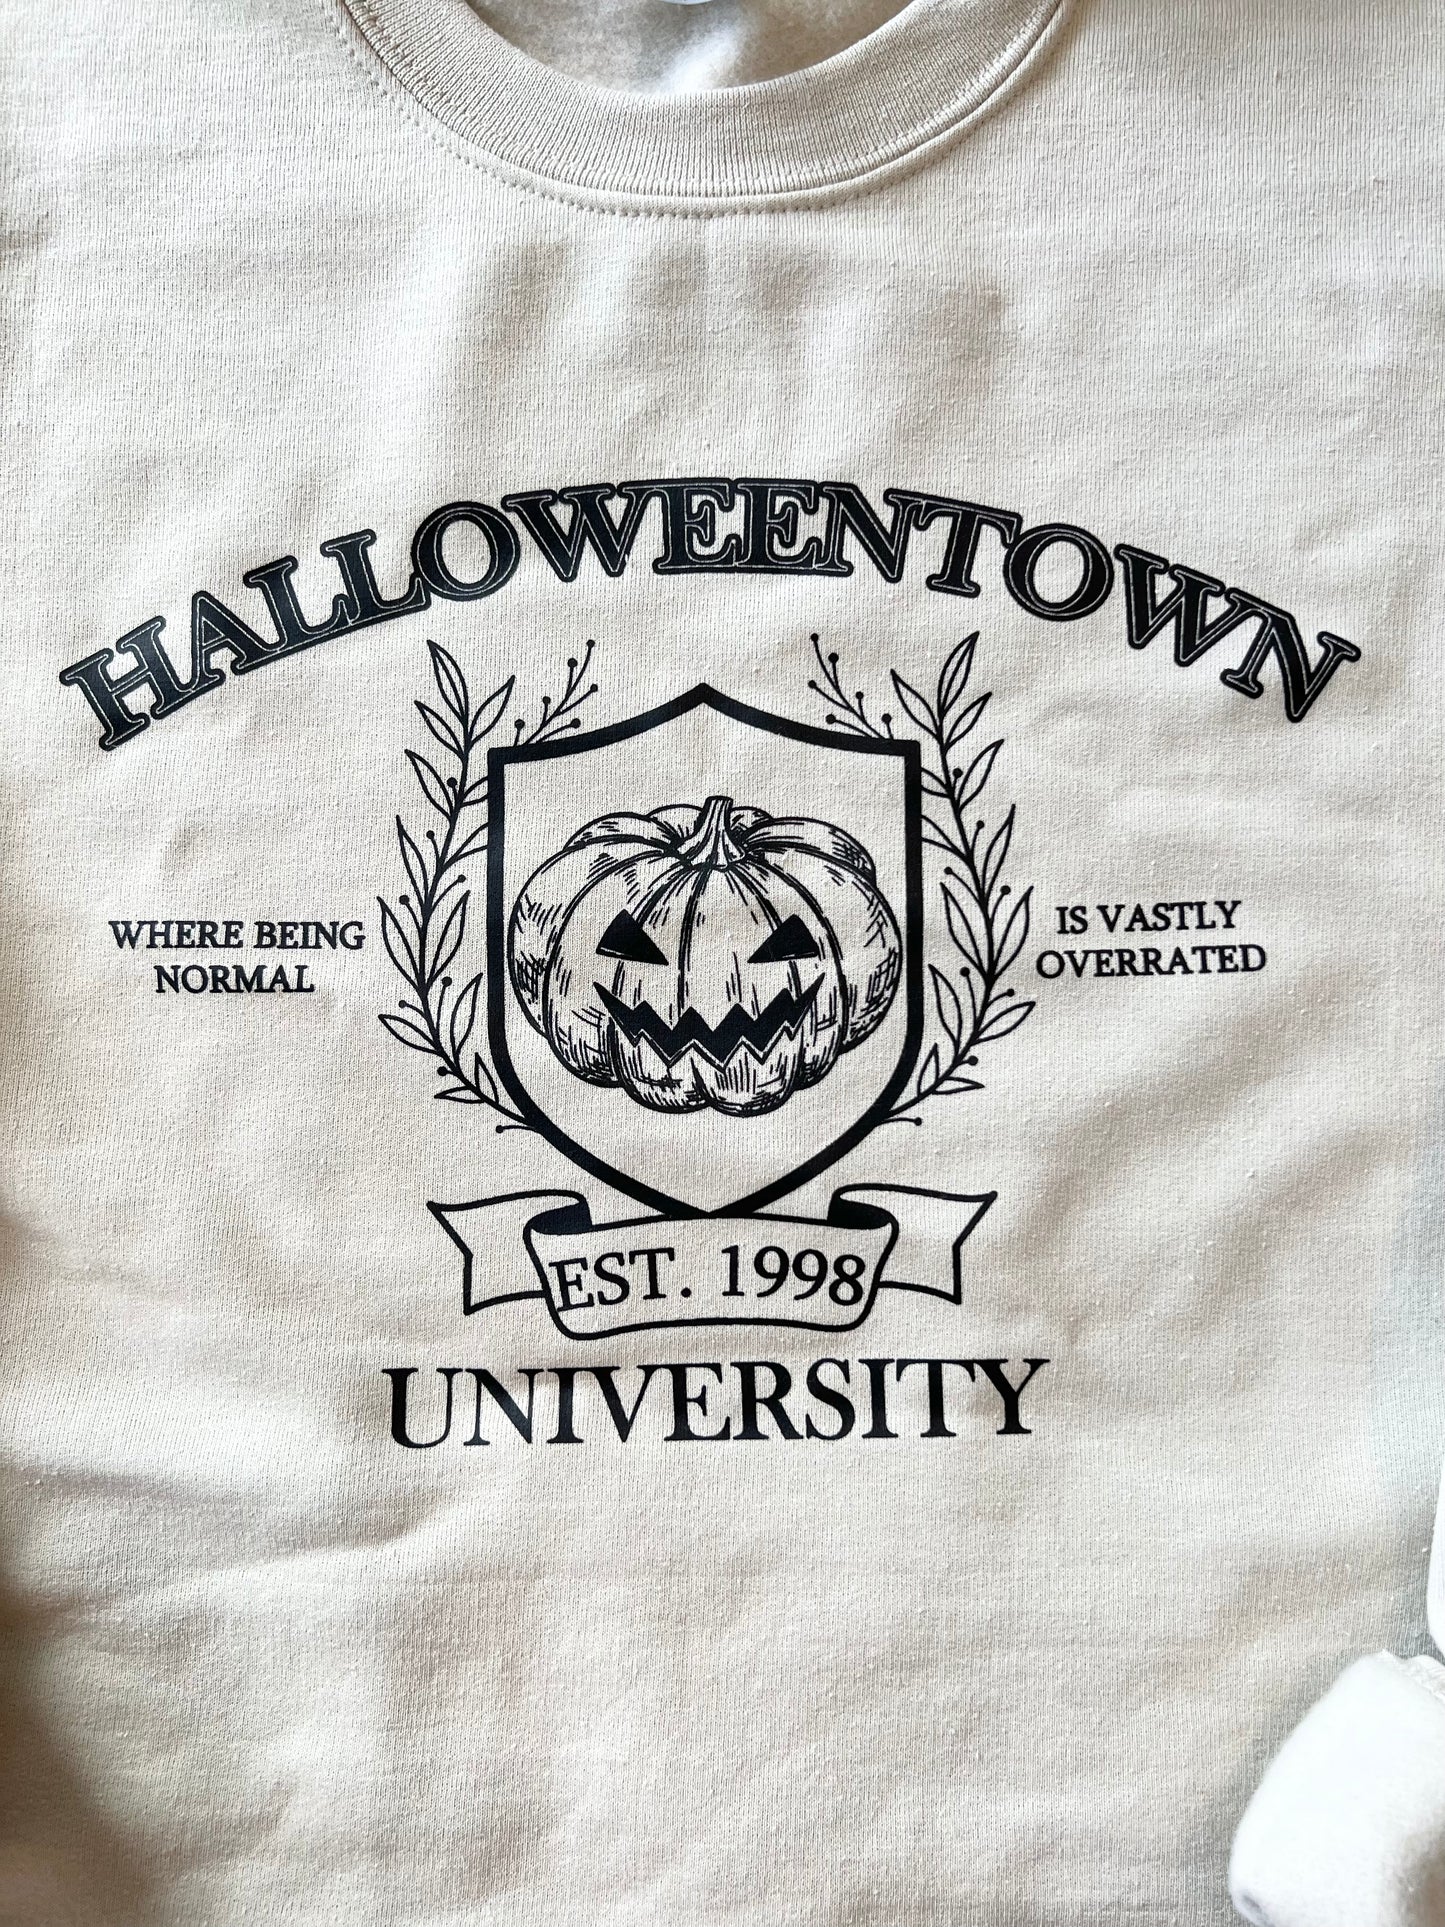 HalloweenTown Crew